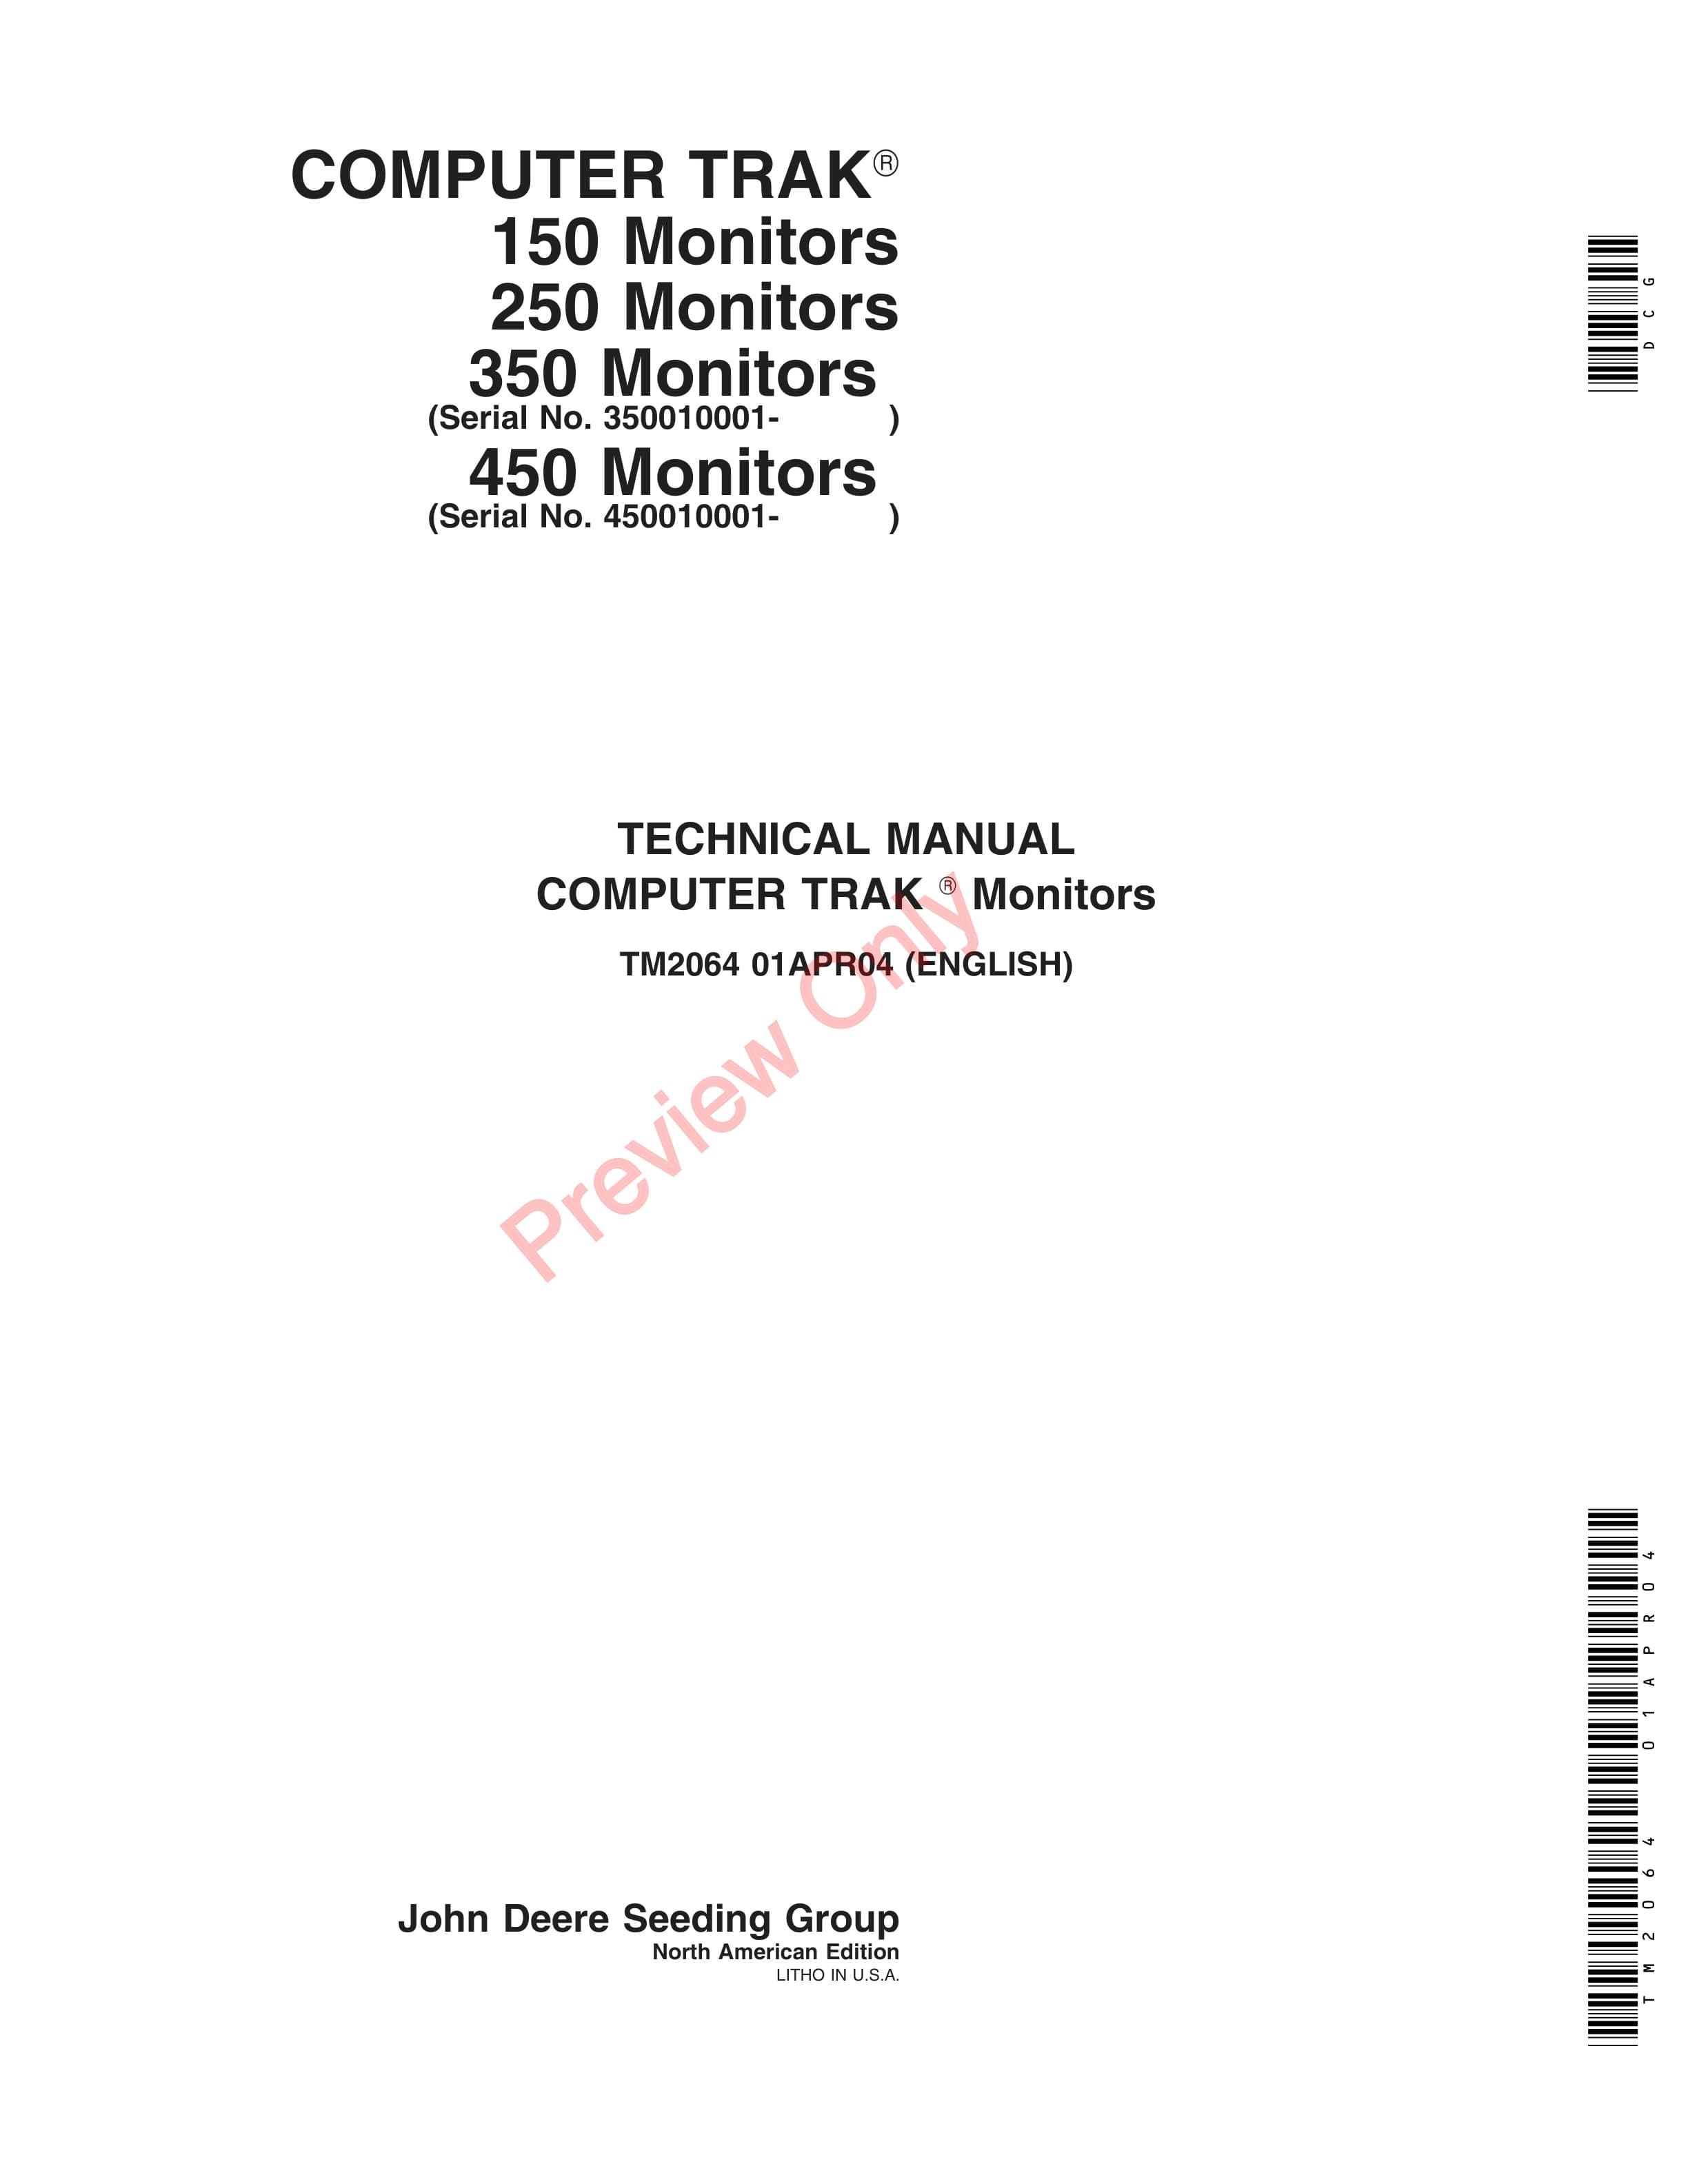 John Deere 350, 450 Computer Trak Seed Monitors Technical Manual TM2064 01APR04 PDF